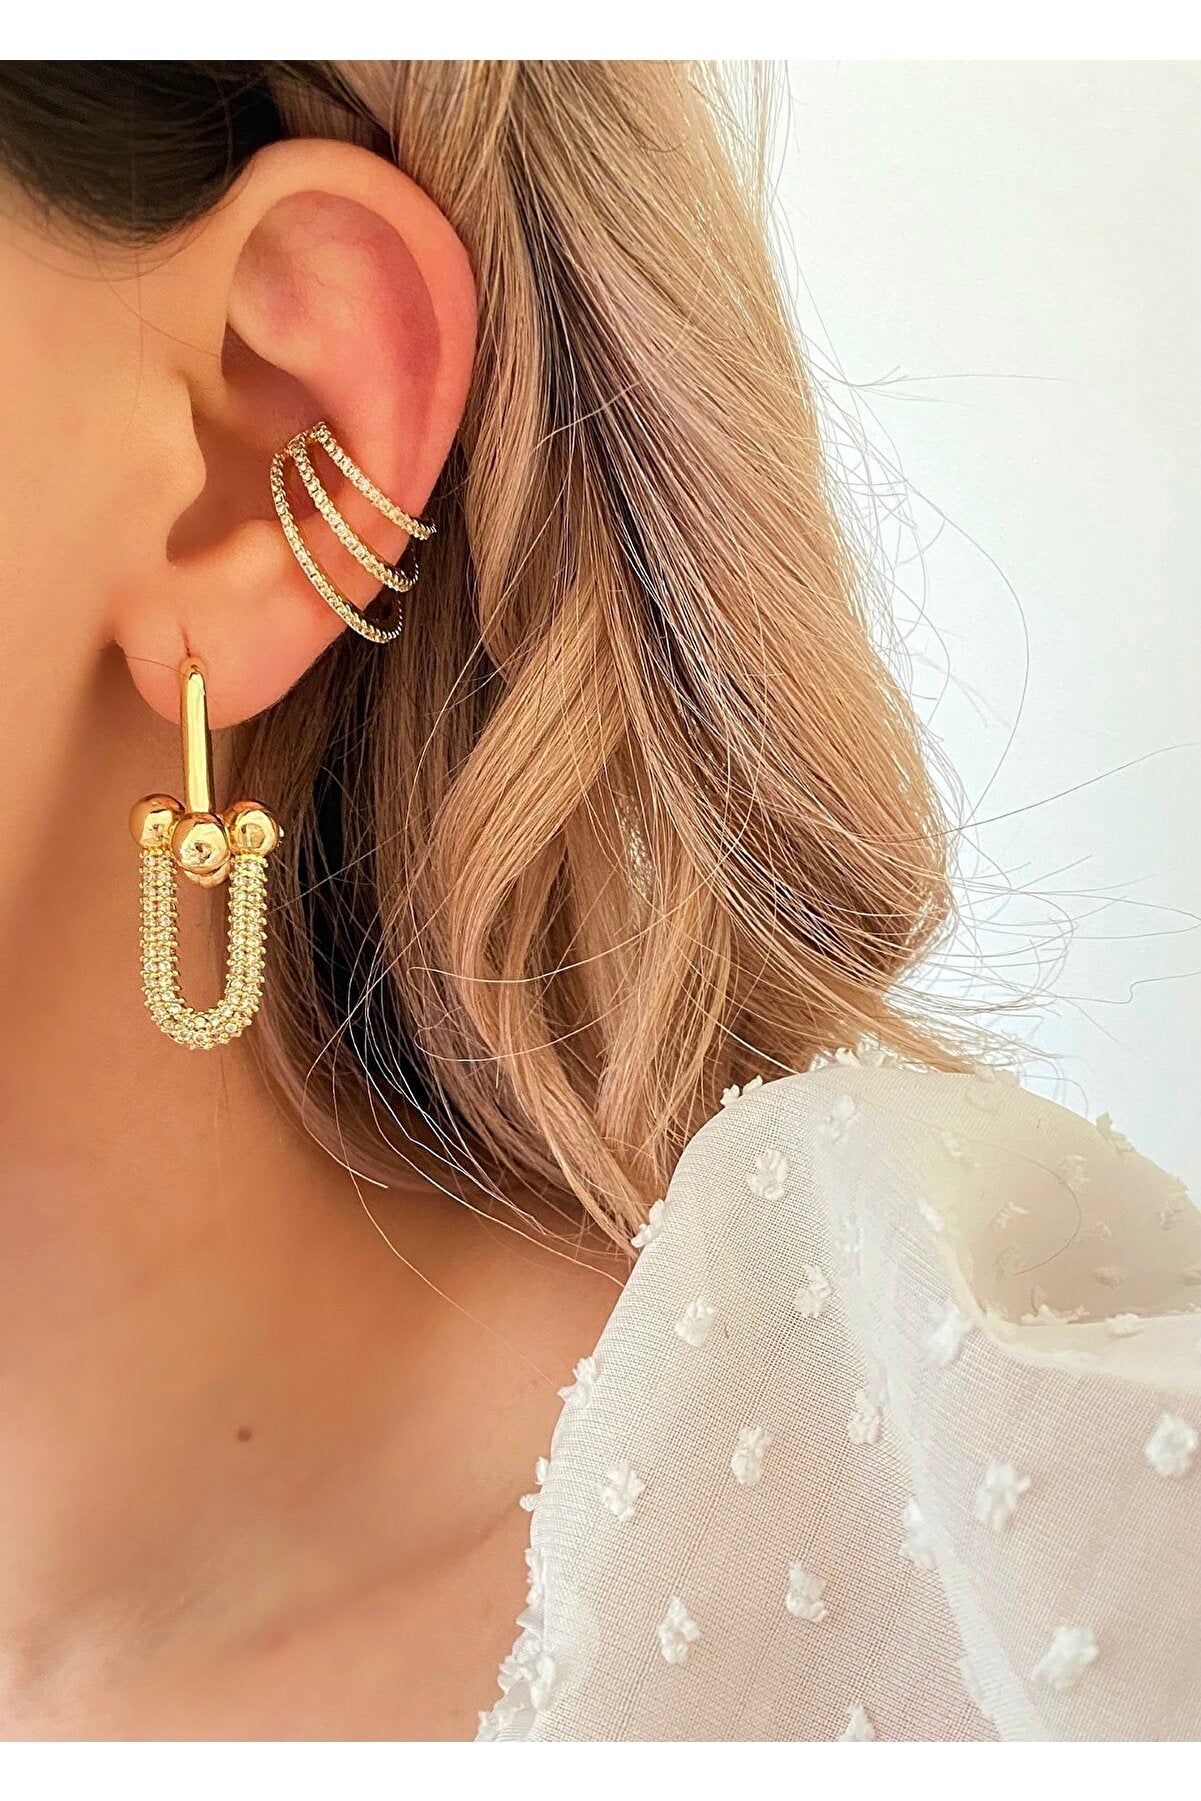 14k Gold Filled U Shaped Hoop Earrings | Hypoallergenic Metal – Hooks and  Luxe